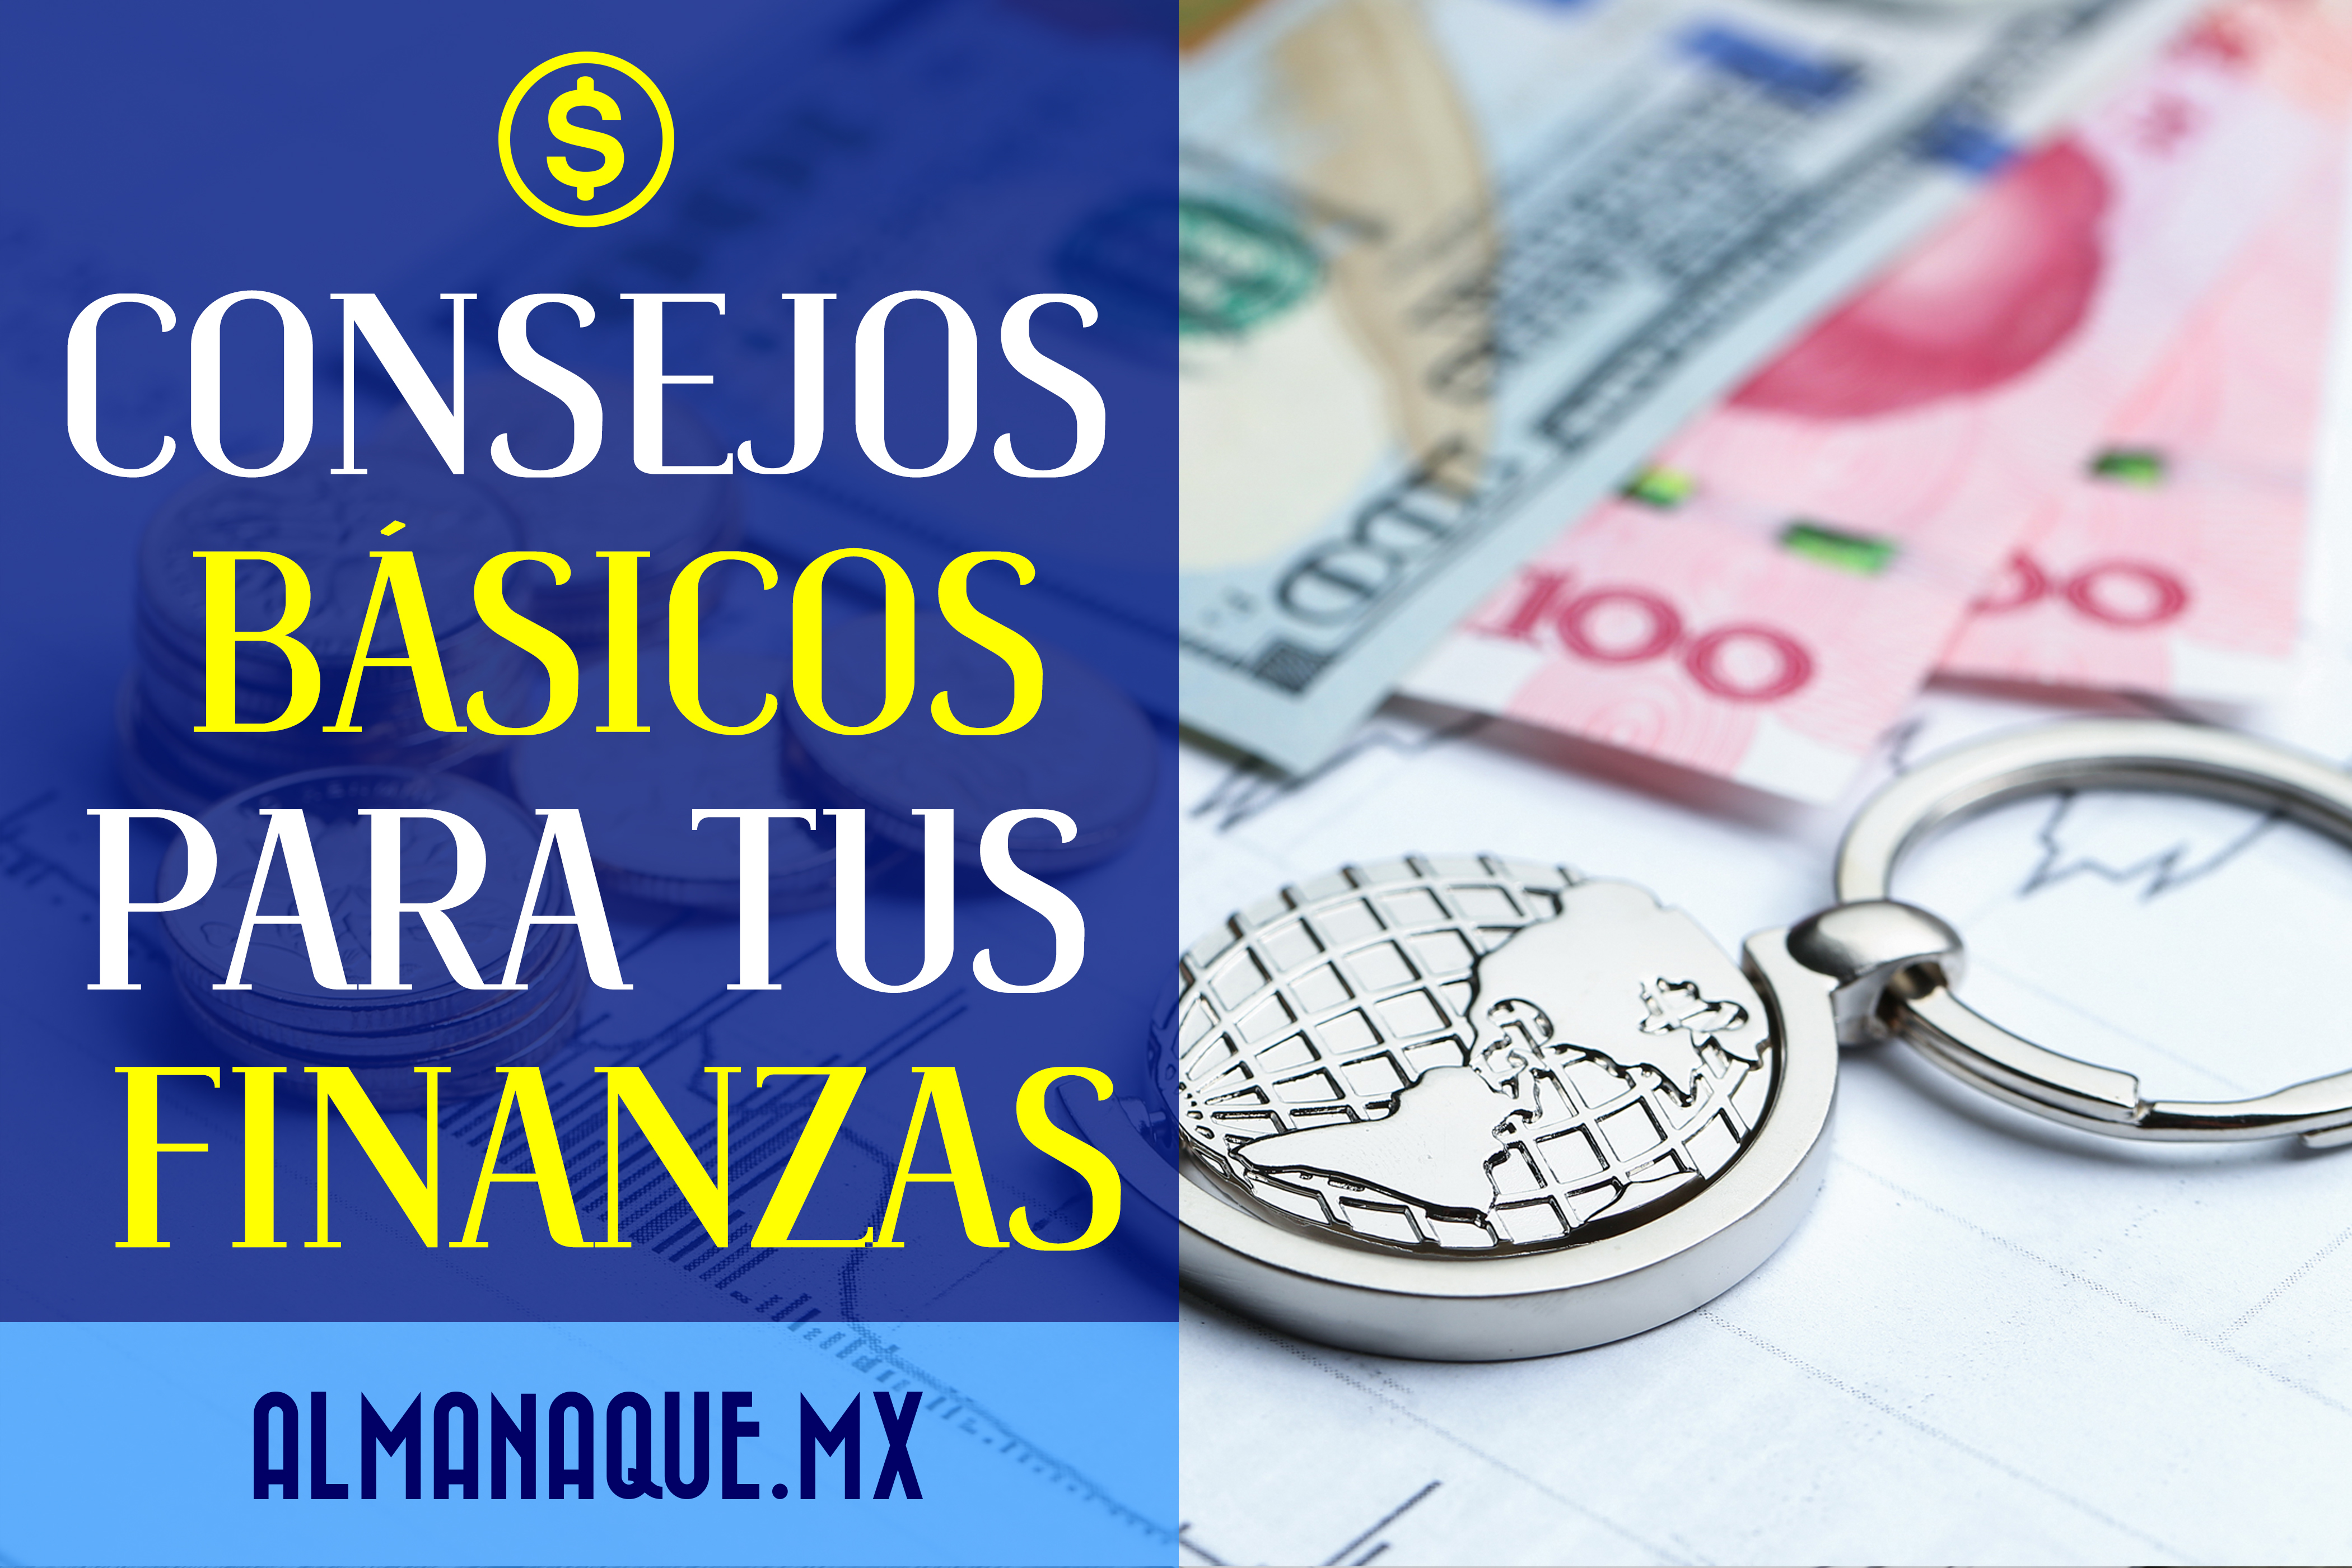 http://www.almanaque.mx/wp-content/uploads/2017/06/despacho-contable-olvera-consejos-basicos-finanzas-blog-almanaque-mx.jpg